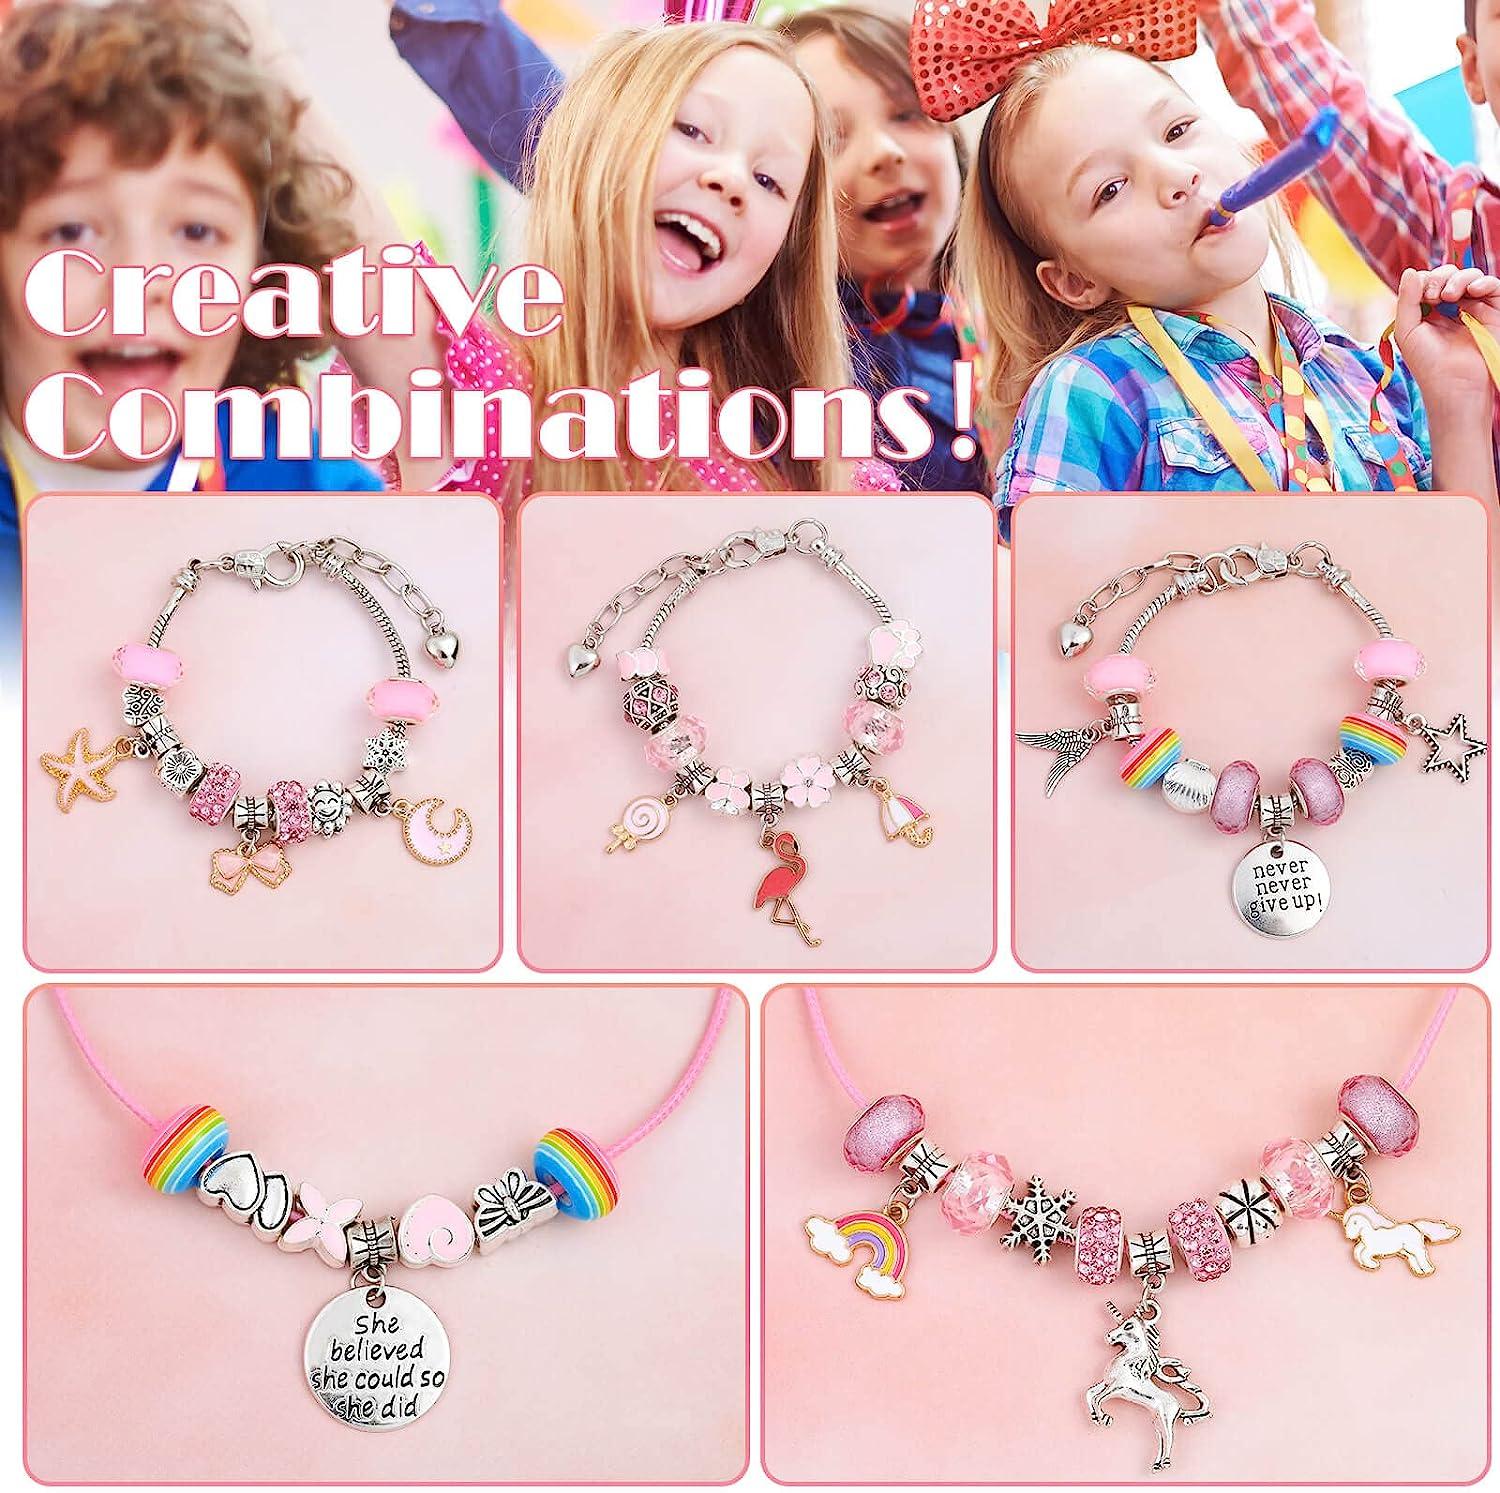 Diy Charm Bracelet Making Kitjewelry Kit For Teen Girls With